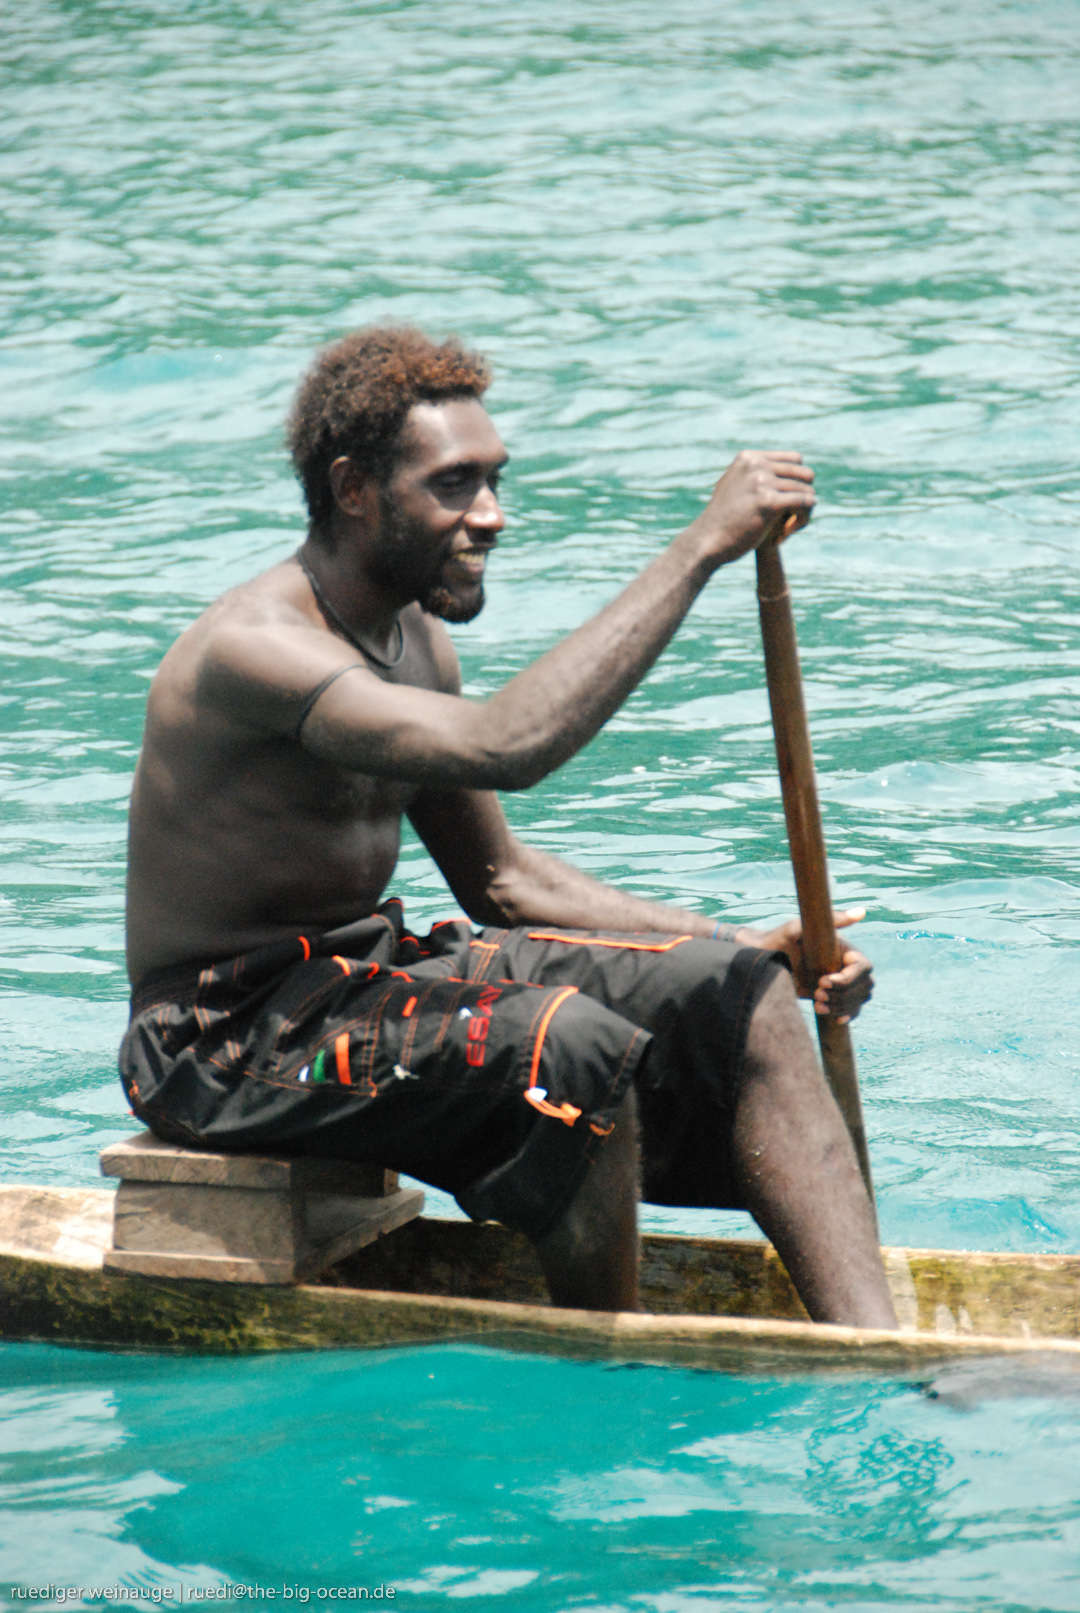 An islander paddling a canoe